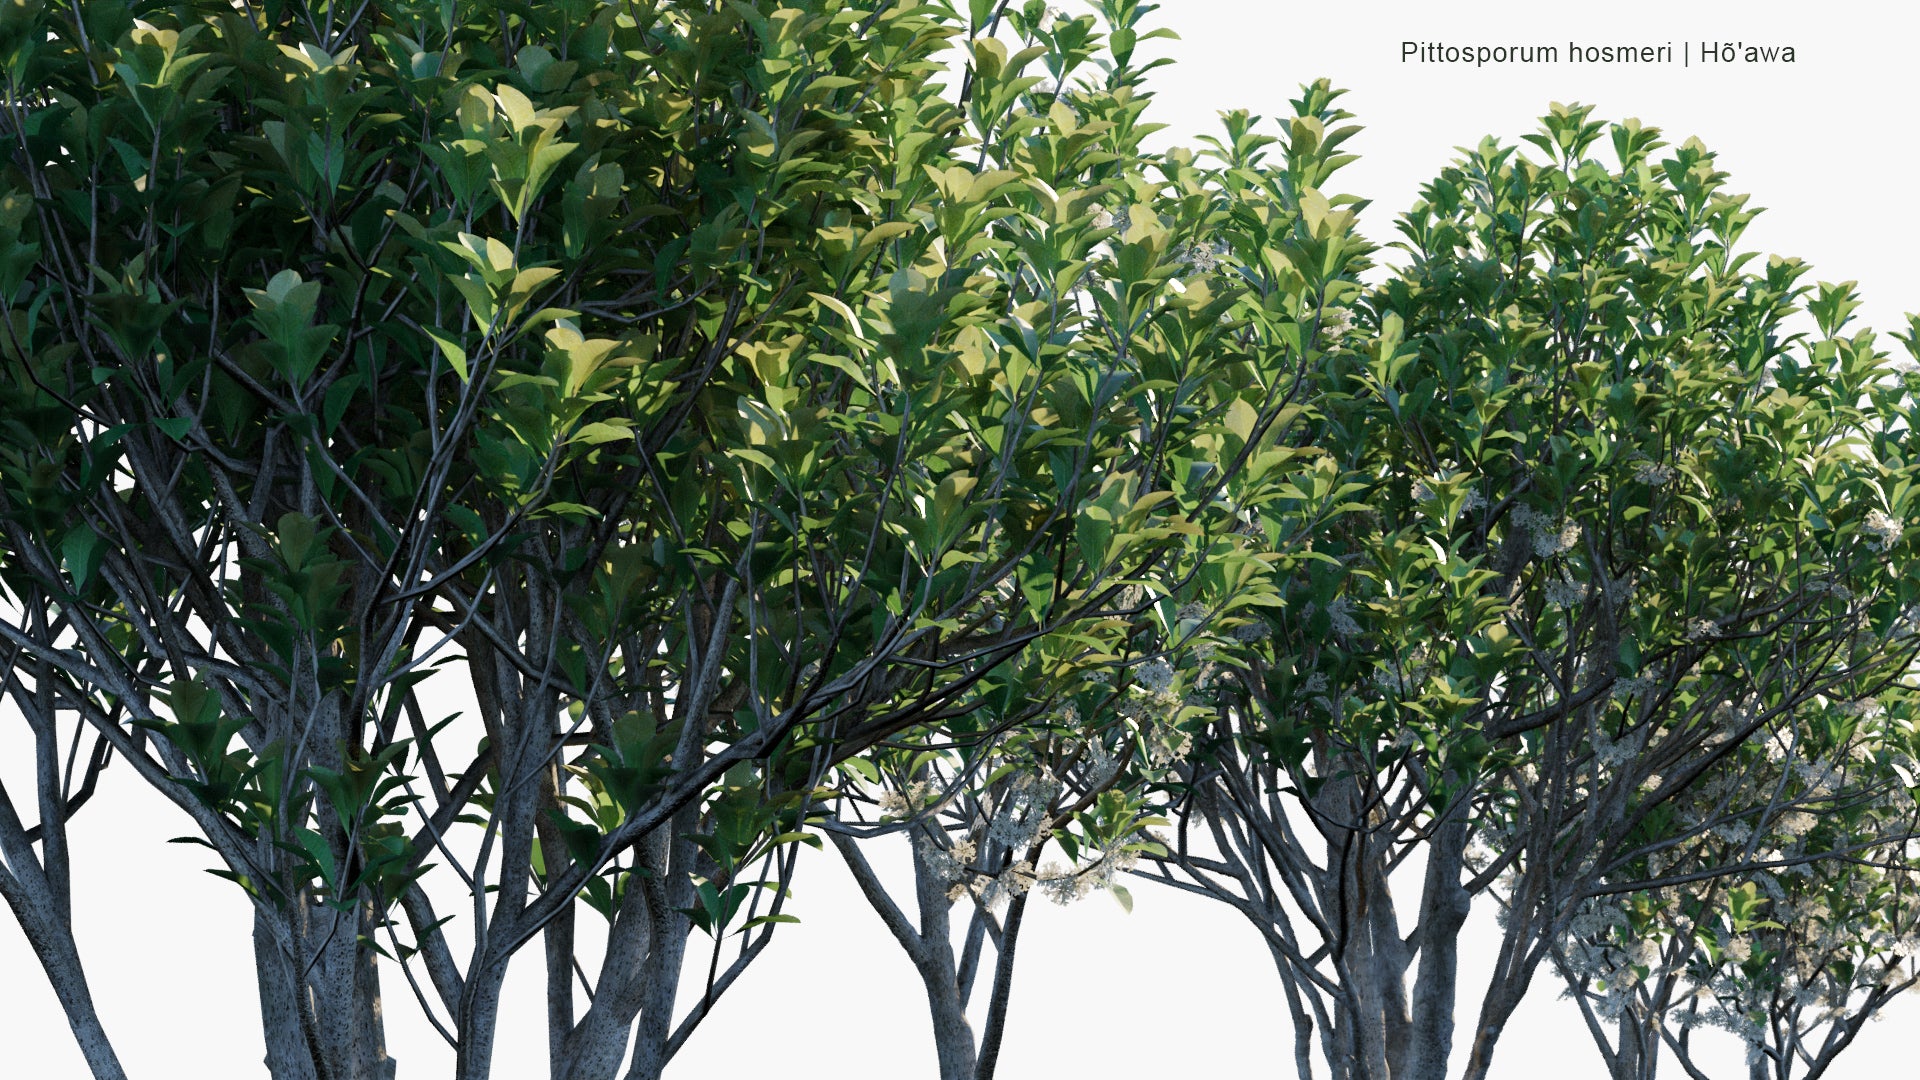 Low Poly Pittosporum Hosmeri - Ho'awa, Hawaiian Magnolia (3D Model)